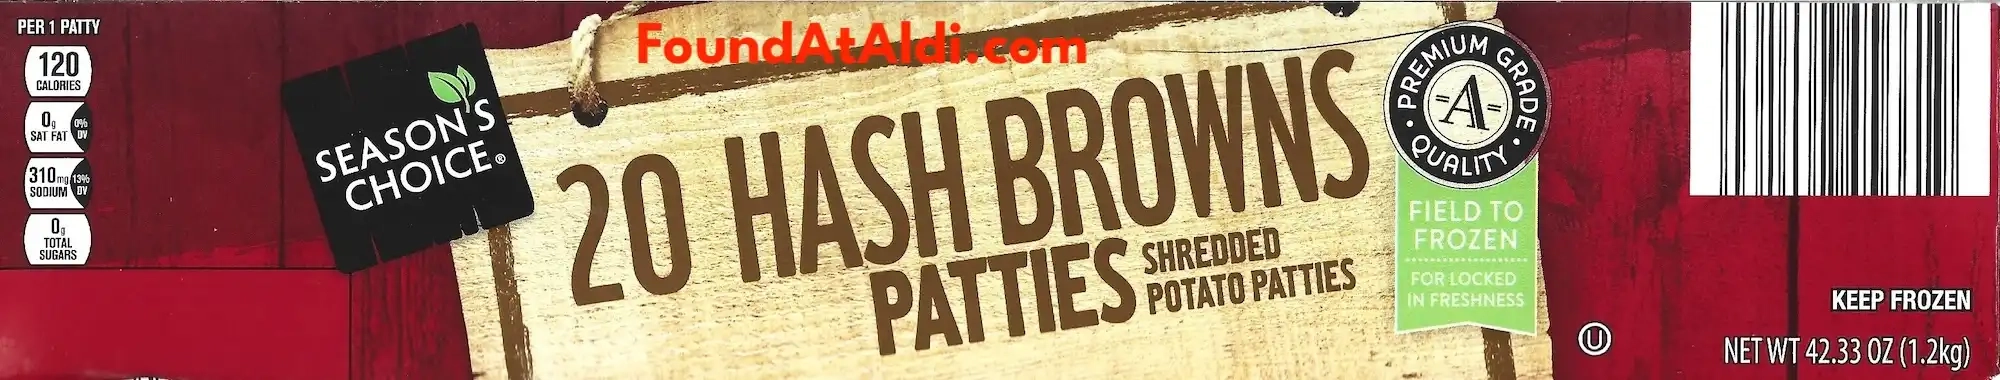 Season's Choice 20 Hash Brown Patties